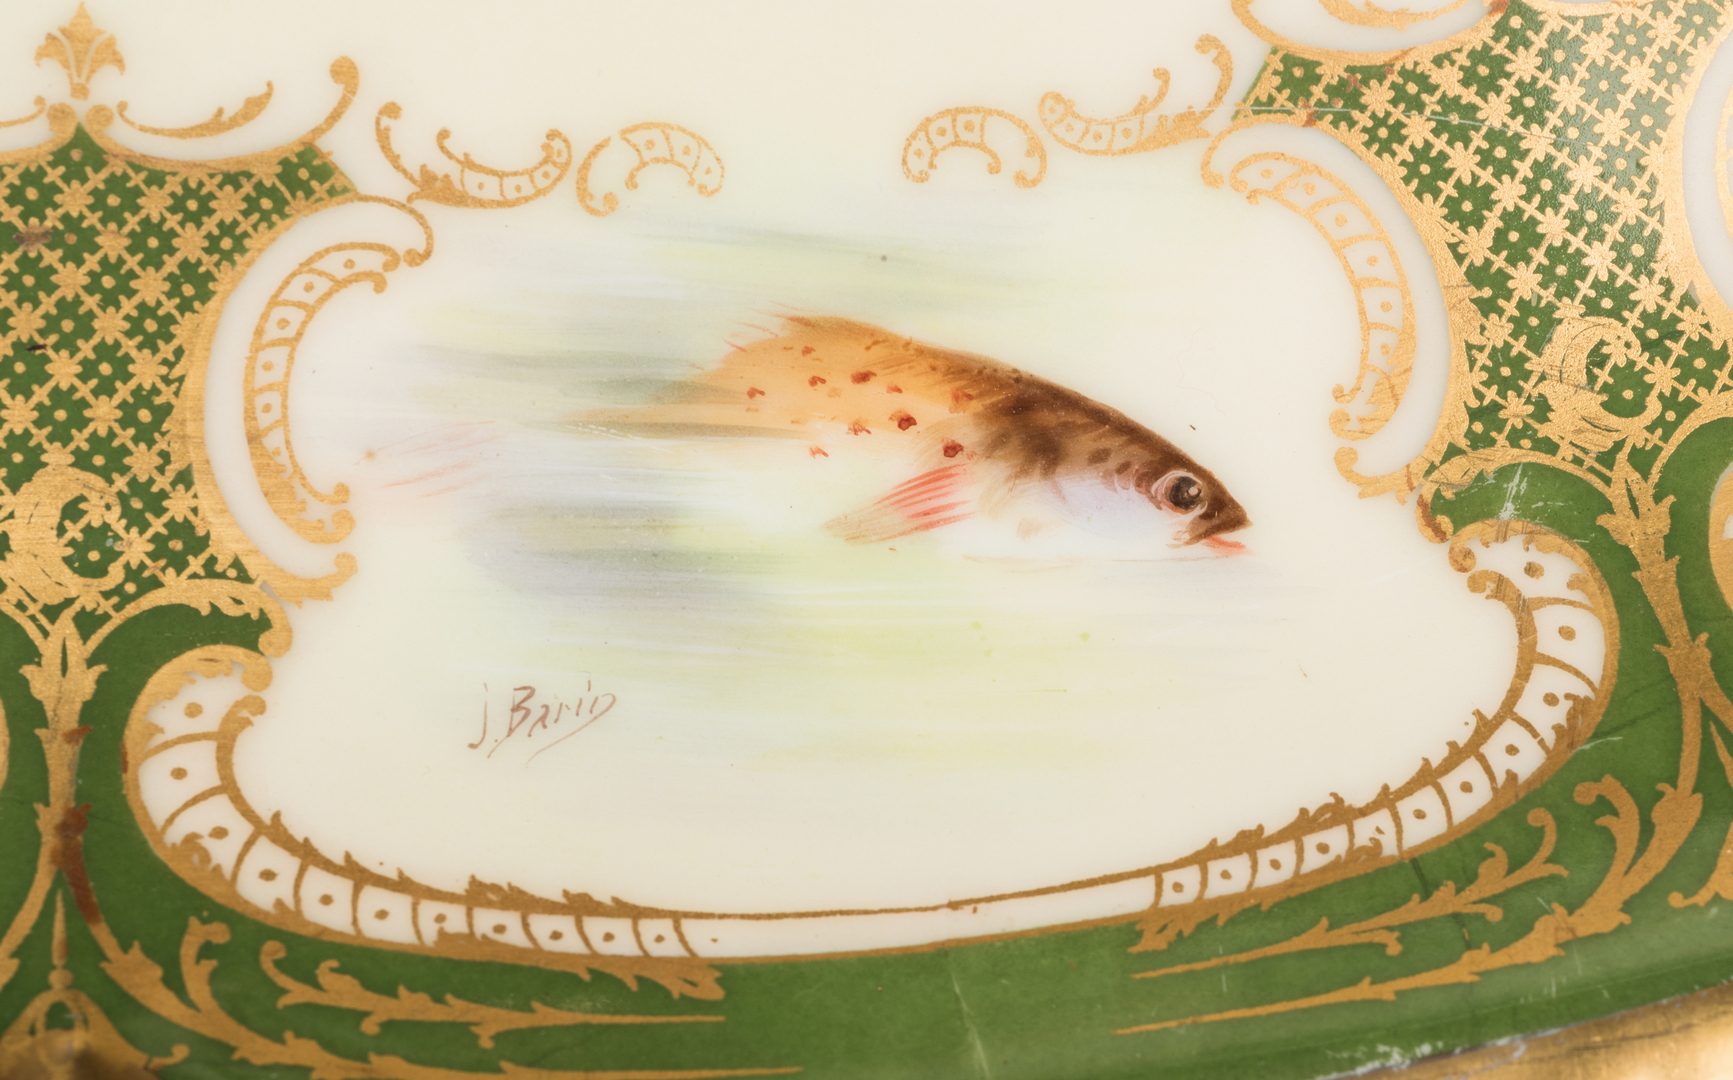 Lot 246: Limoges Fish Set – 12 plates plus platter, artist signed